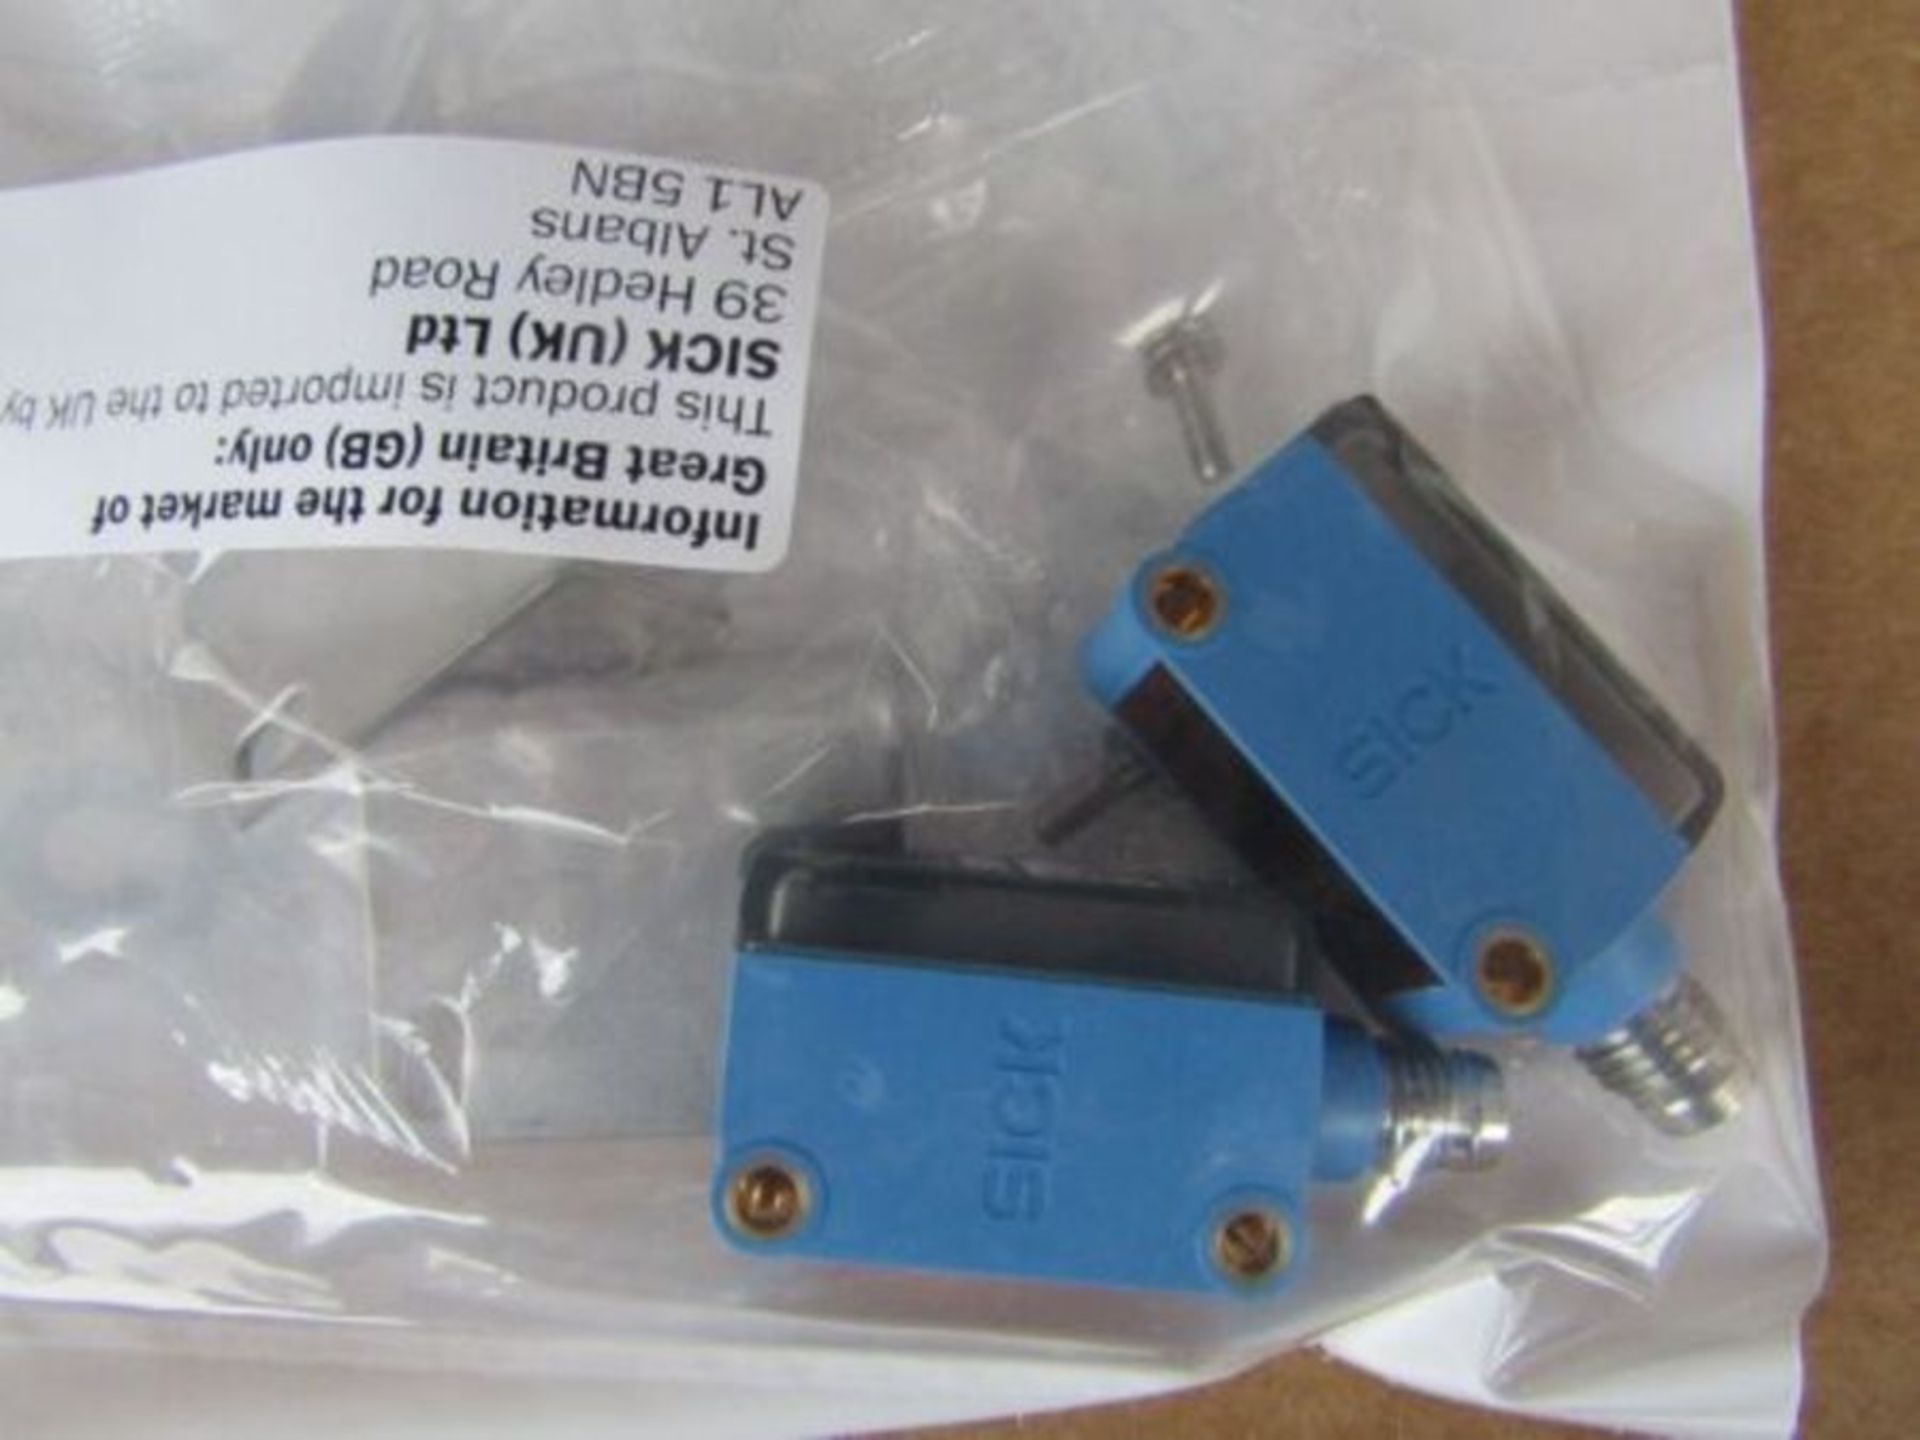 28 Photoelectric Sensors - Mainly Sick - 14 products - nice little bundle worth £3k on ebay - Image 3 of 3